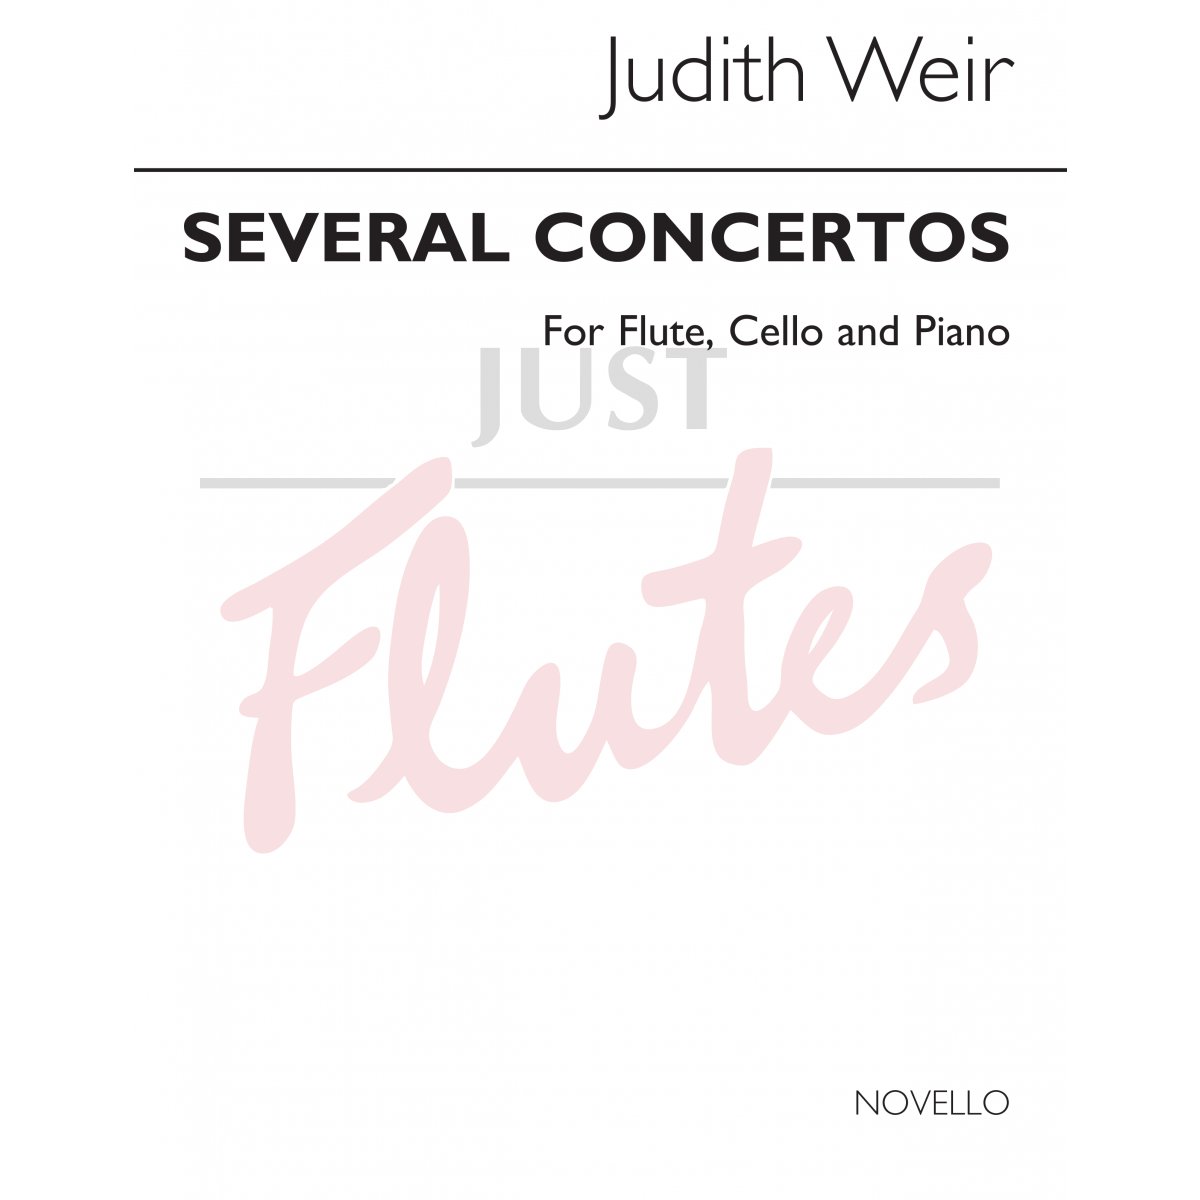 Several Concertos For Flute, Cello and Piano